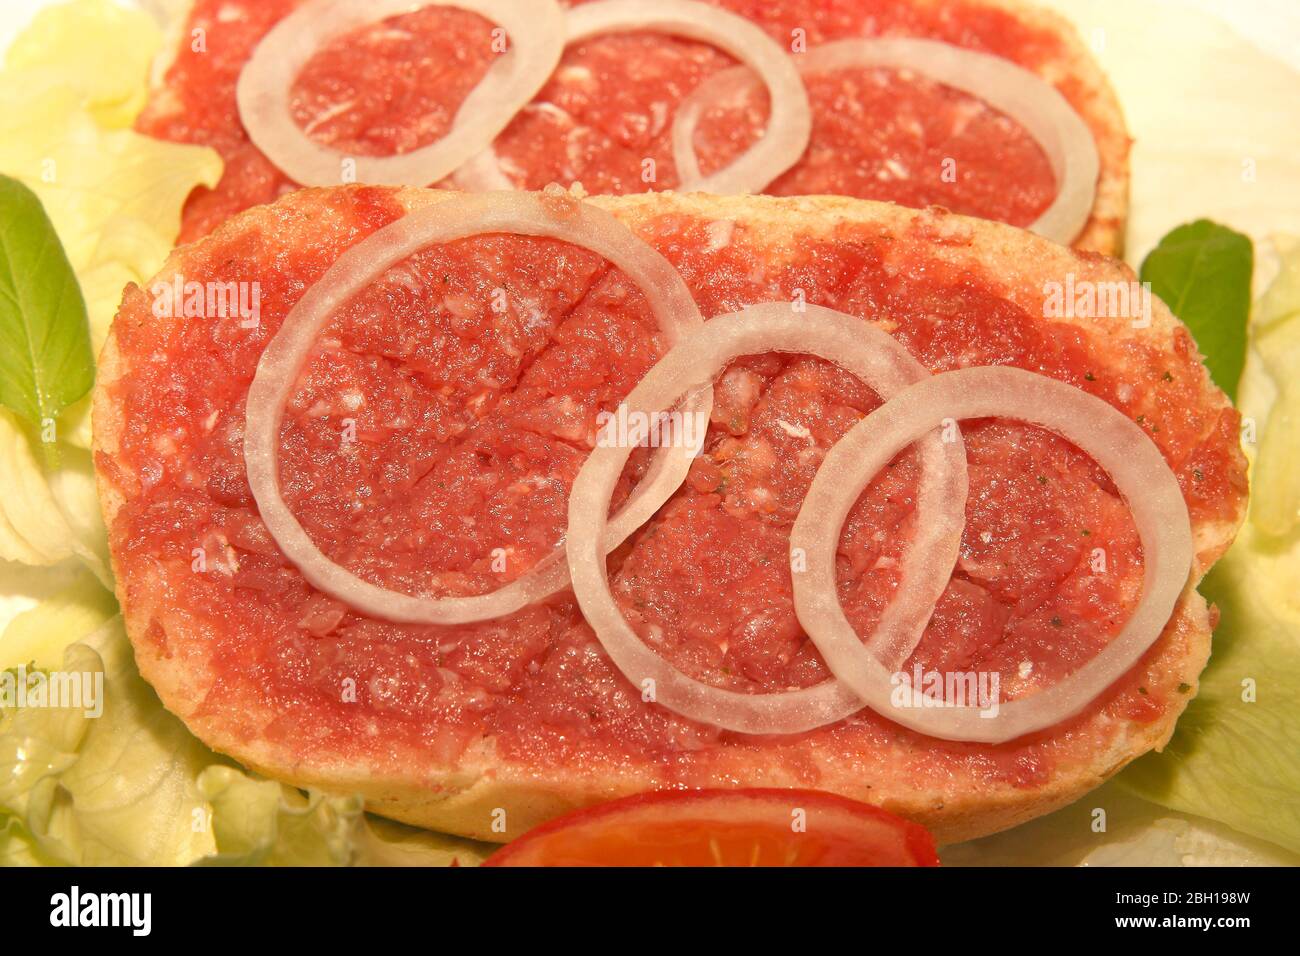 two half Mett on bread rolls with onion rings on lettuce, Germany Stock Photo